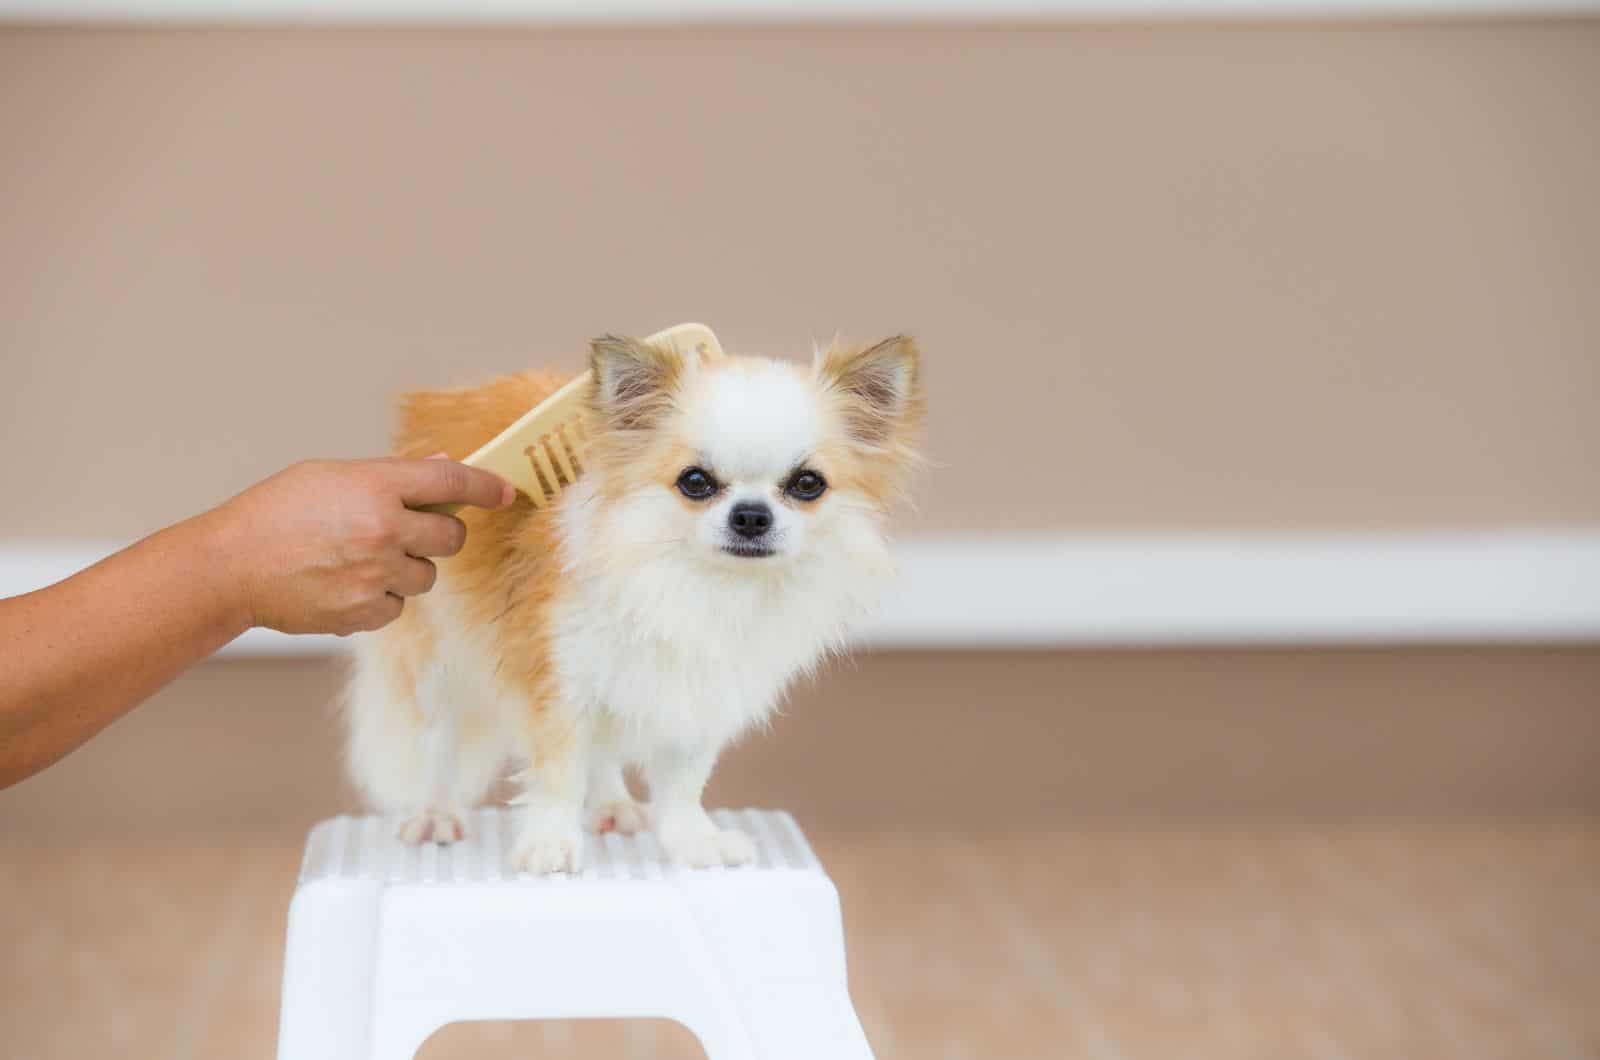 owner brushing Chihuahua's coat